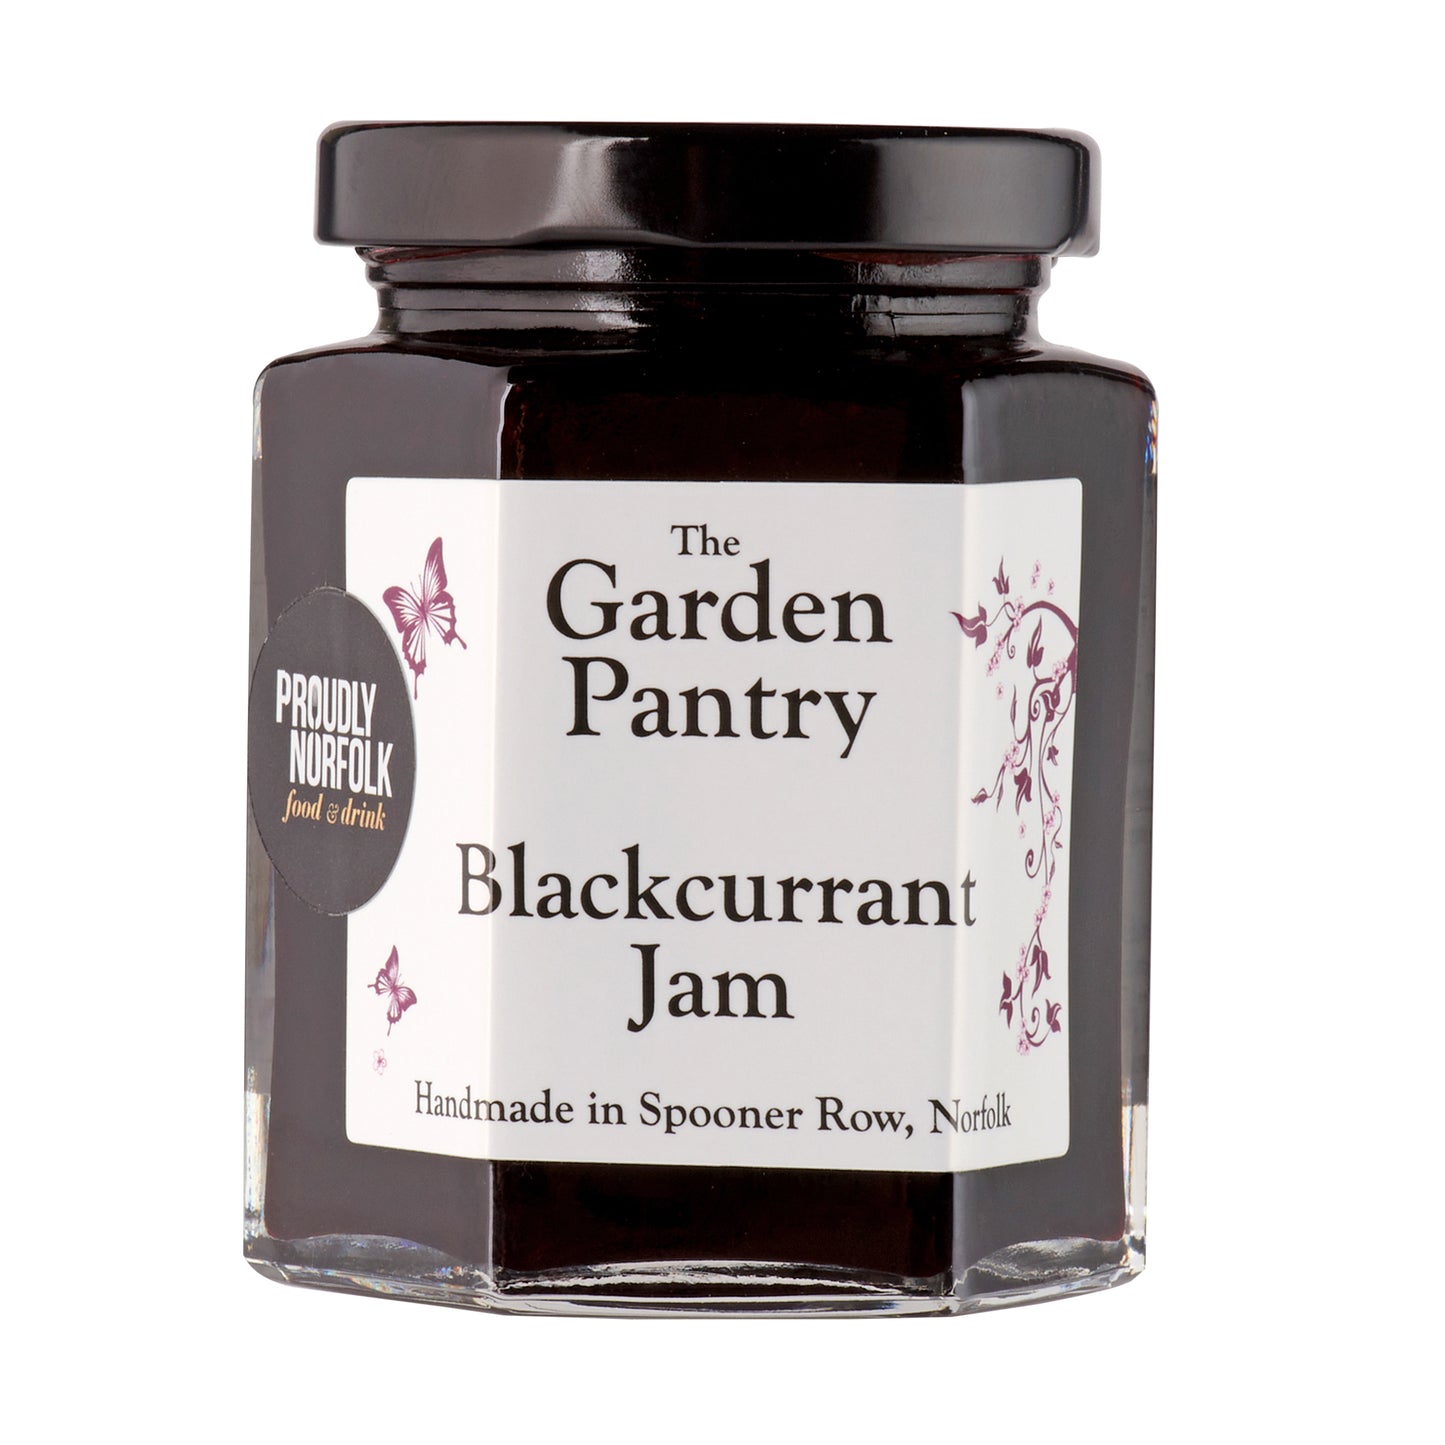 The Garden Pantry Blackcurrant Jam